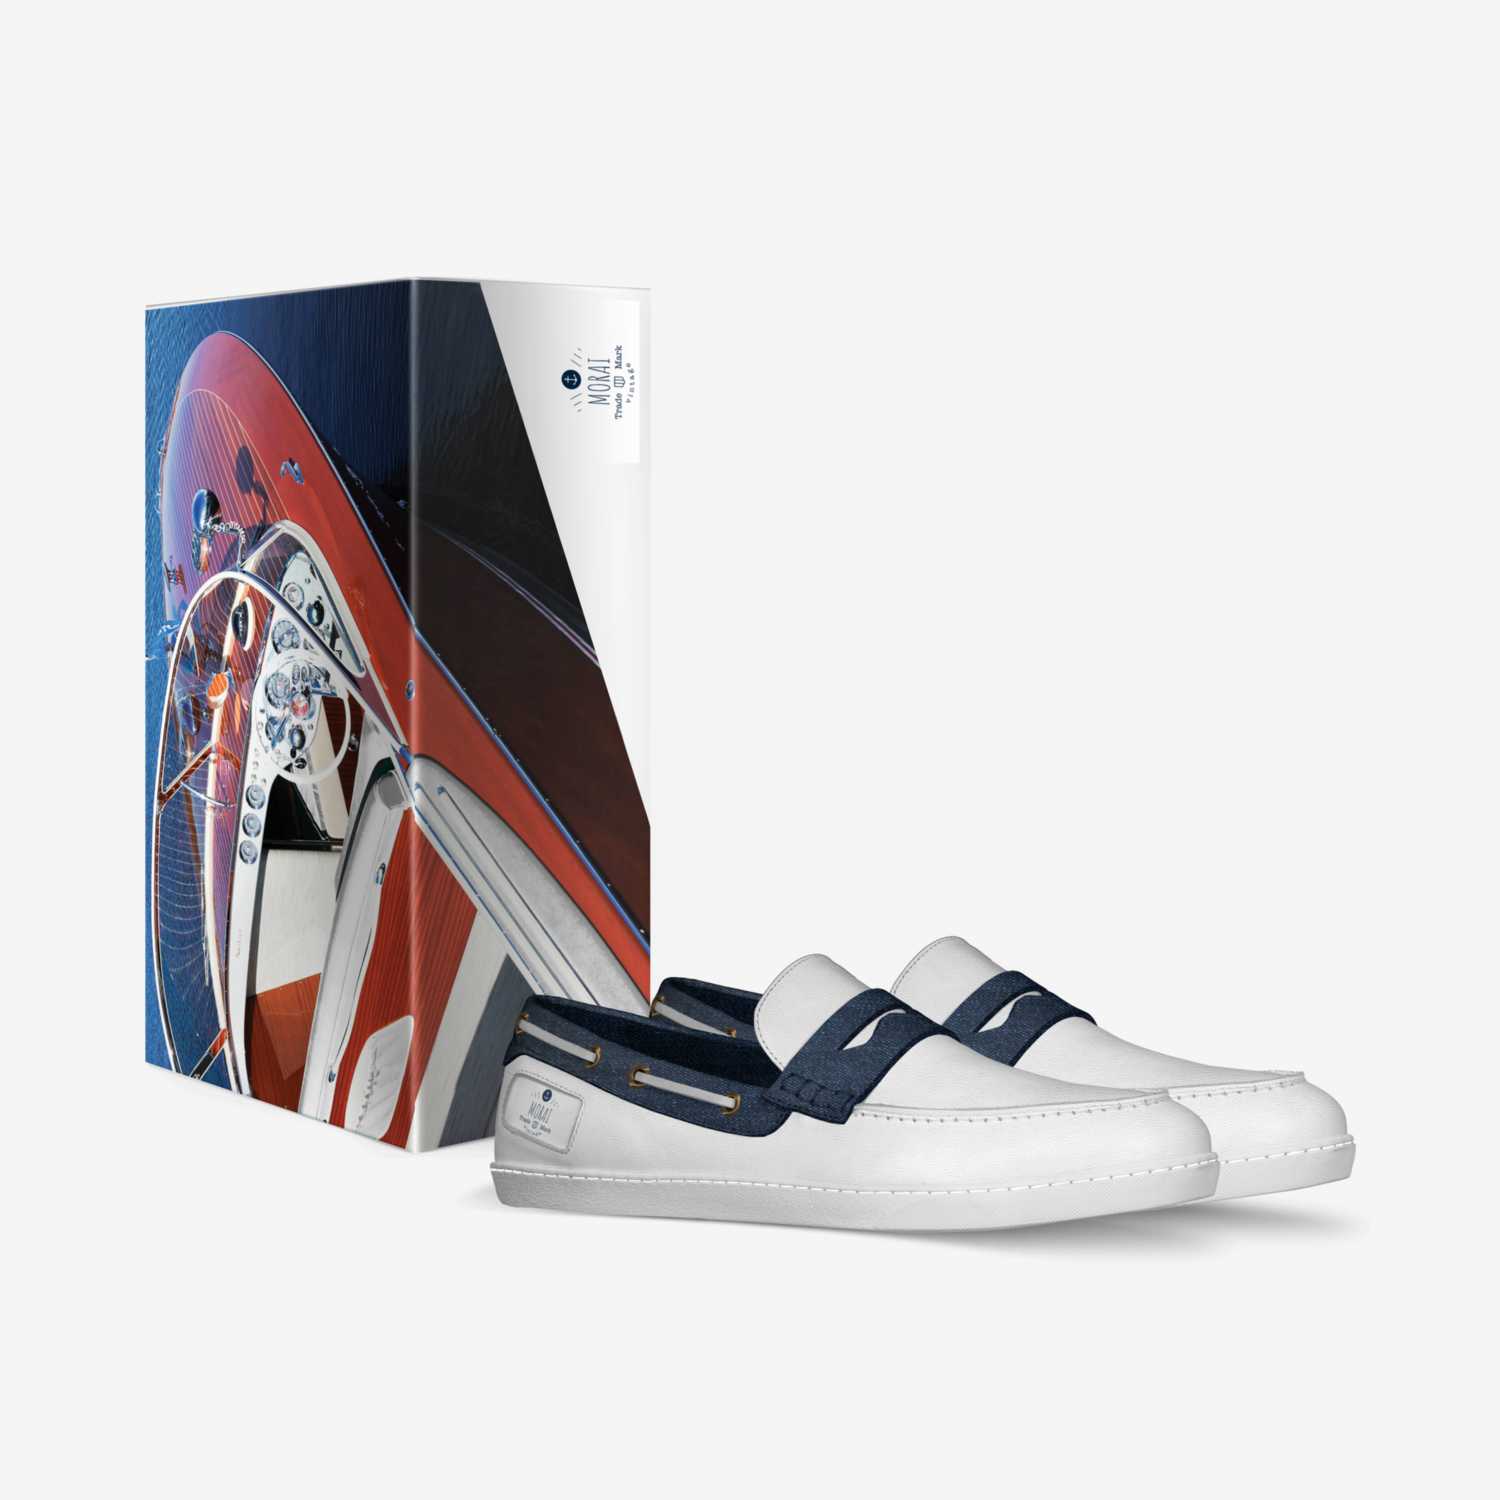 Morai custom made in Italy shoes by Cynthia Medashefski | Box view